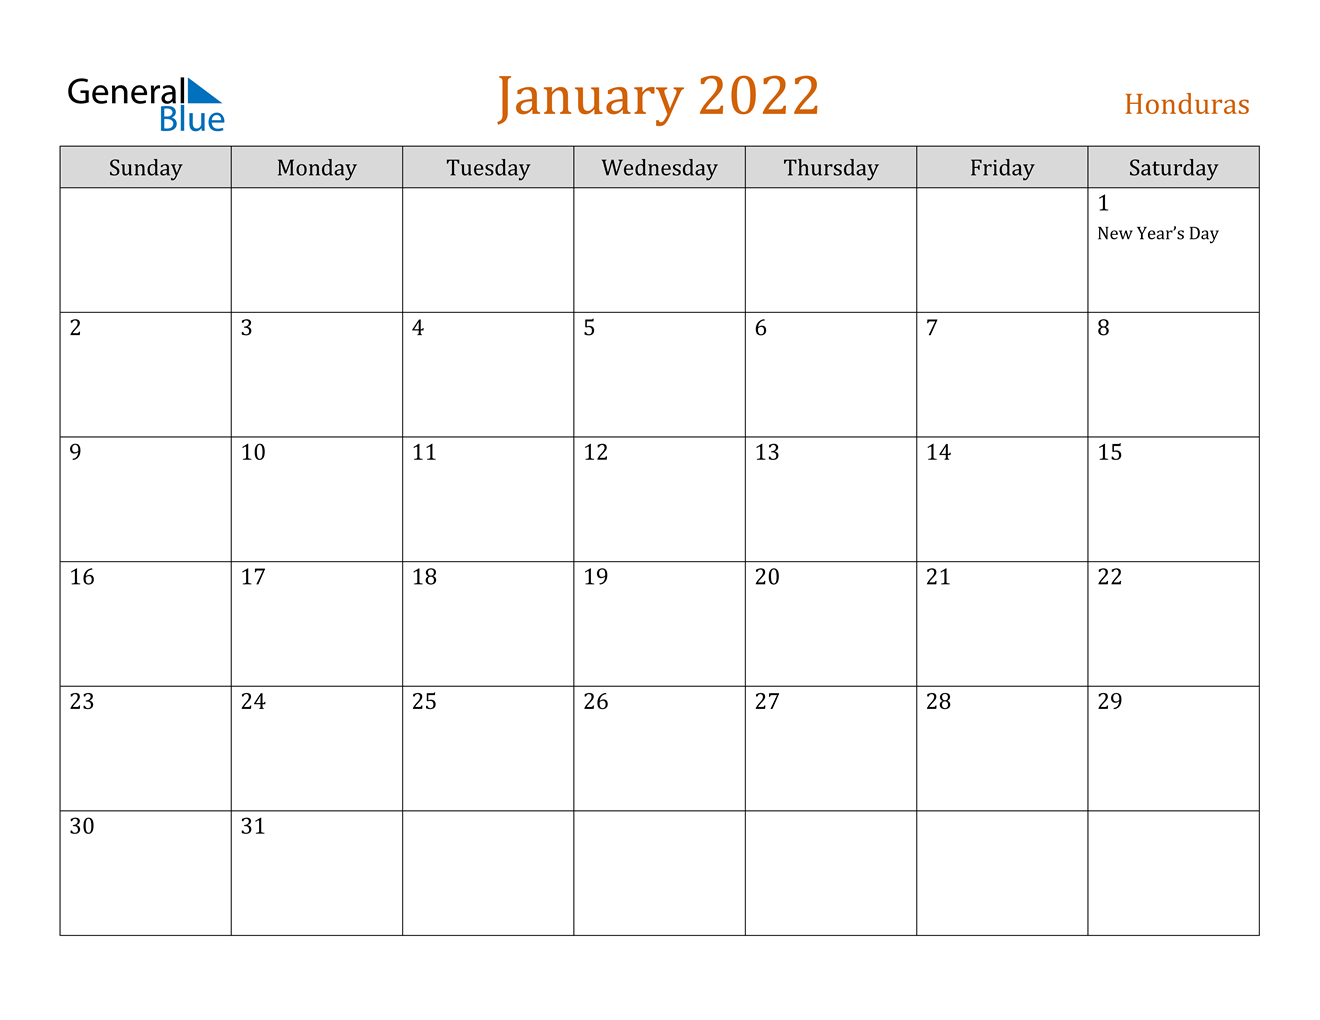 January 2022 Calendar - Honduras  November December January 2022 Calendar